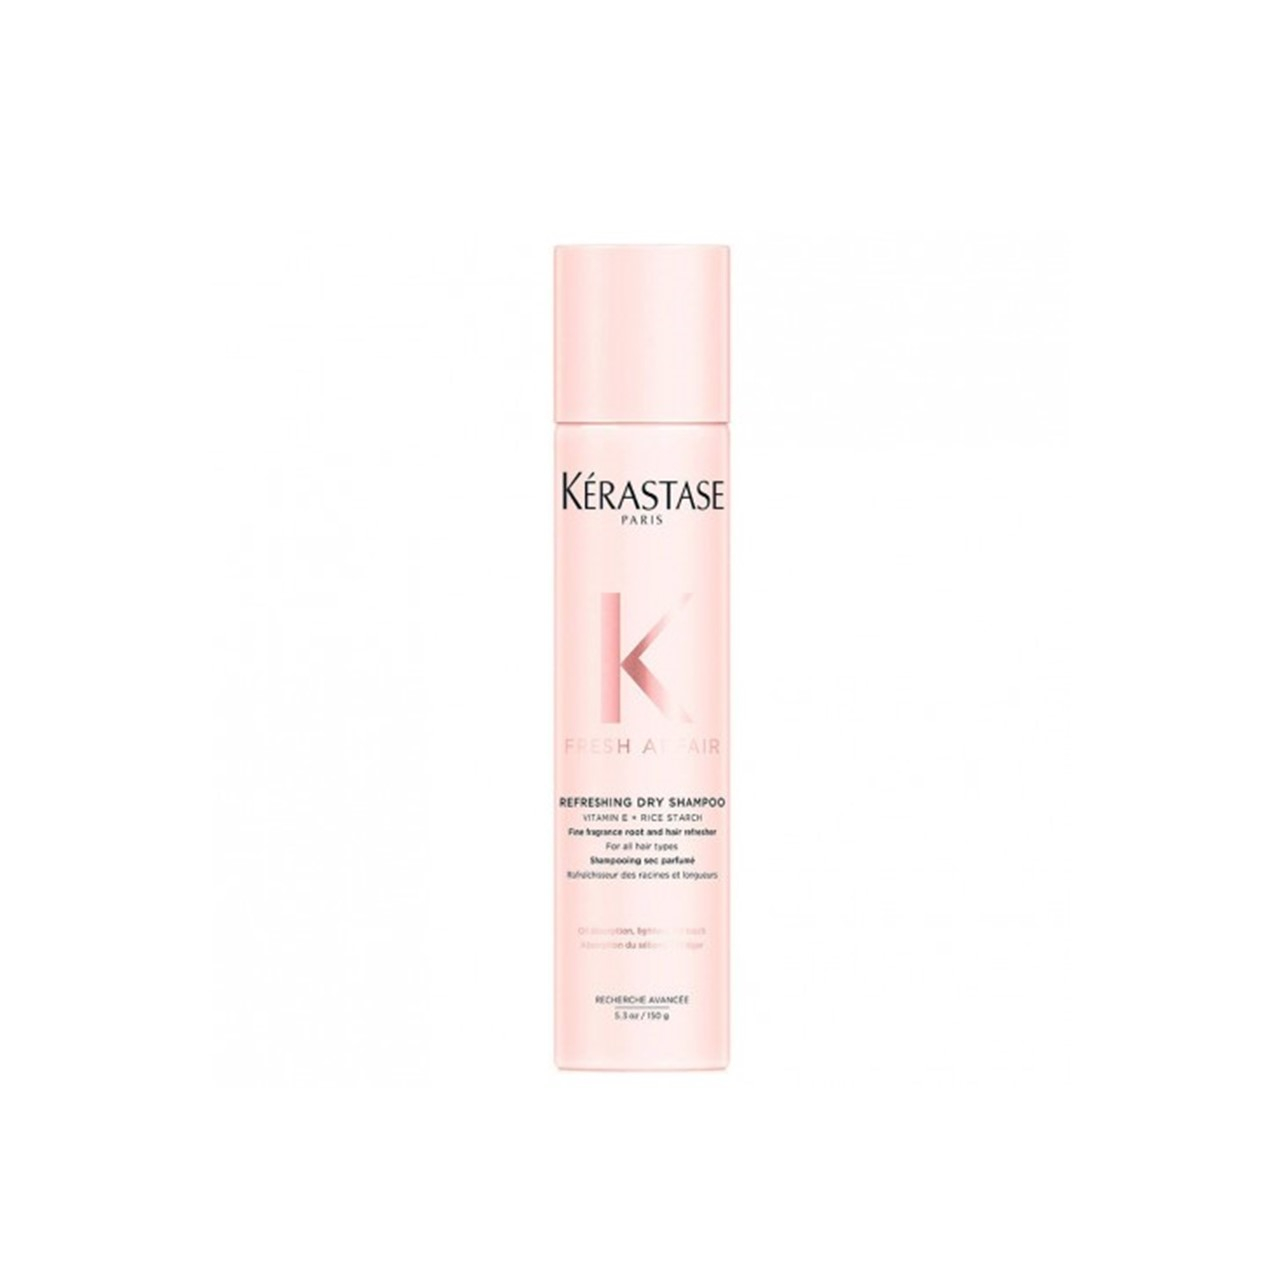 Kérastase Fresh Affair Refreshing Dry Shampoo 233ml (7.88fl oz)